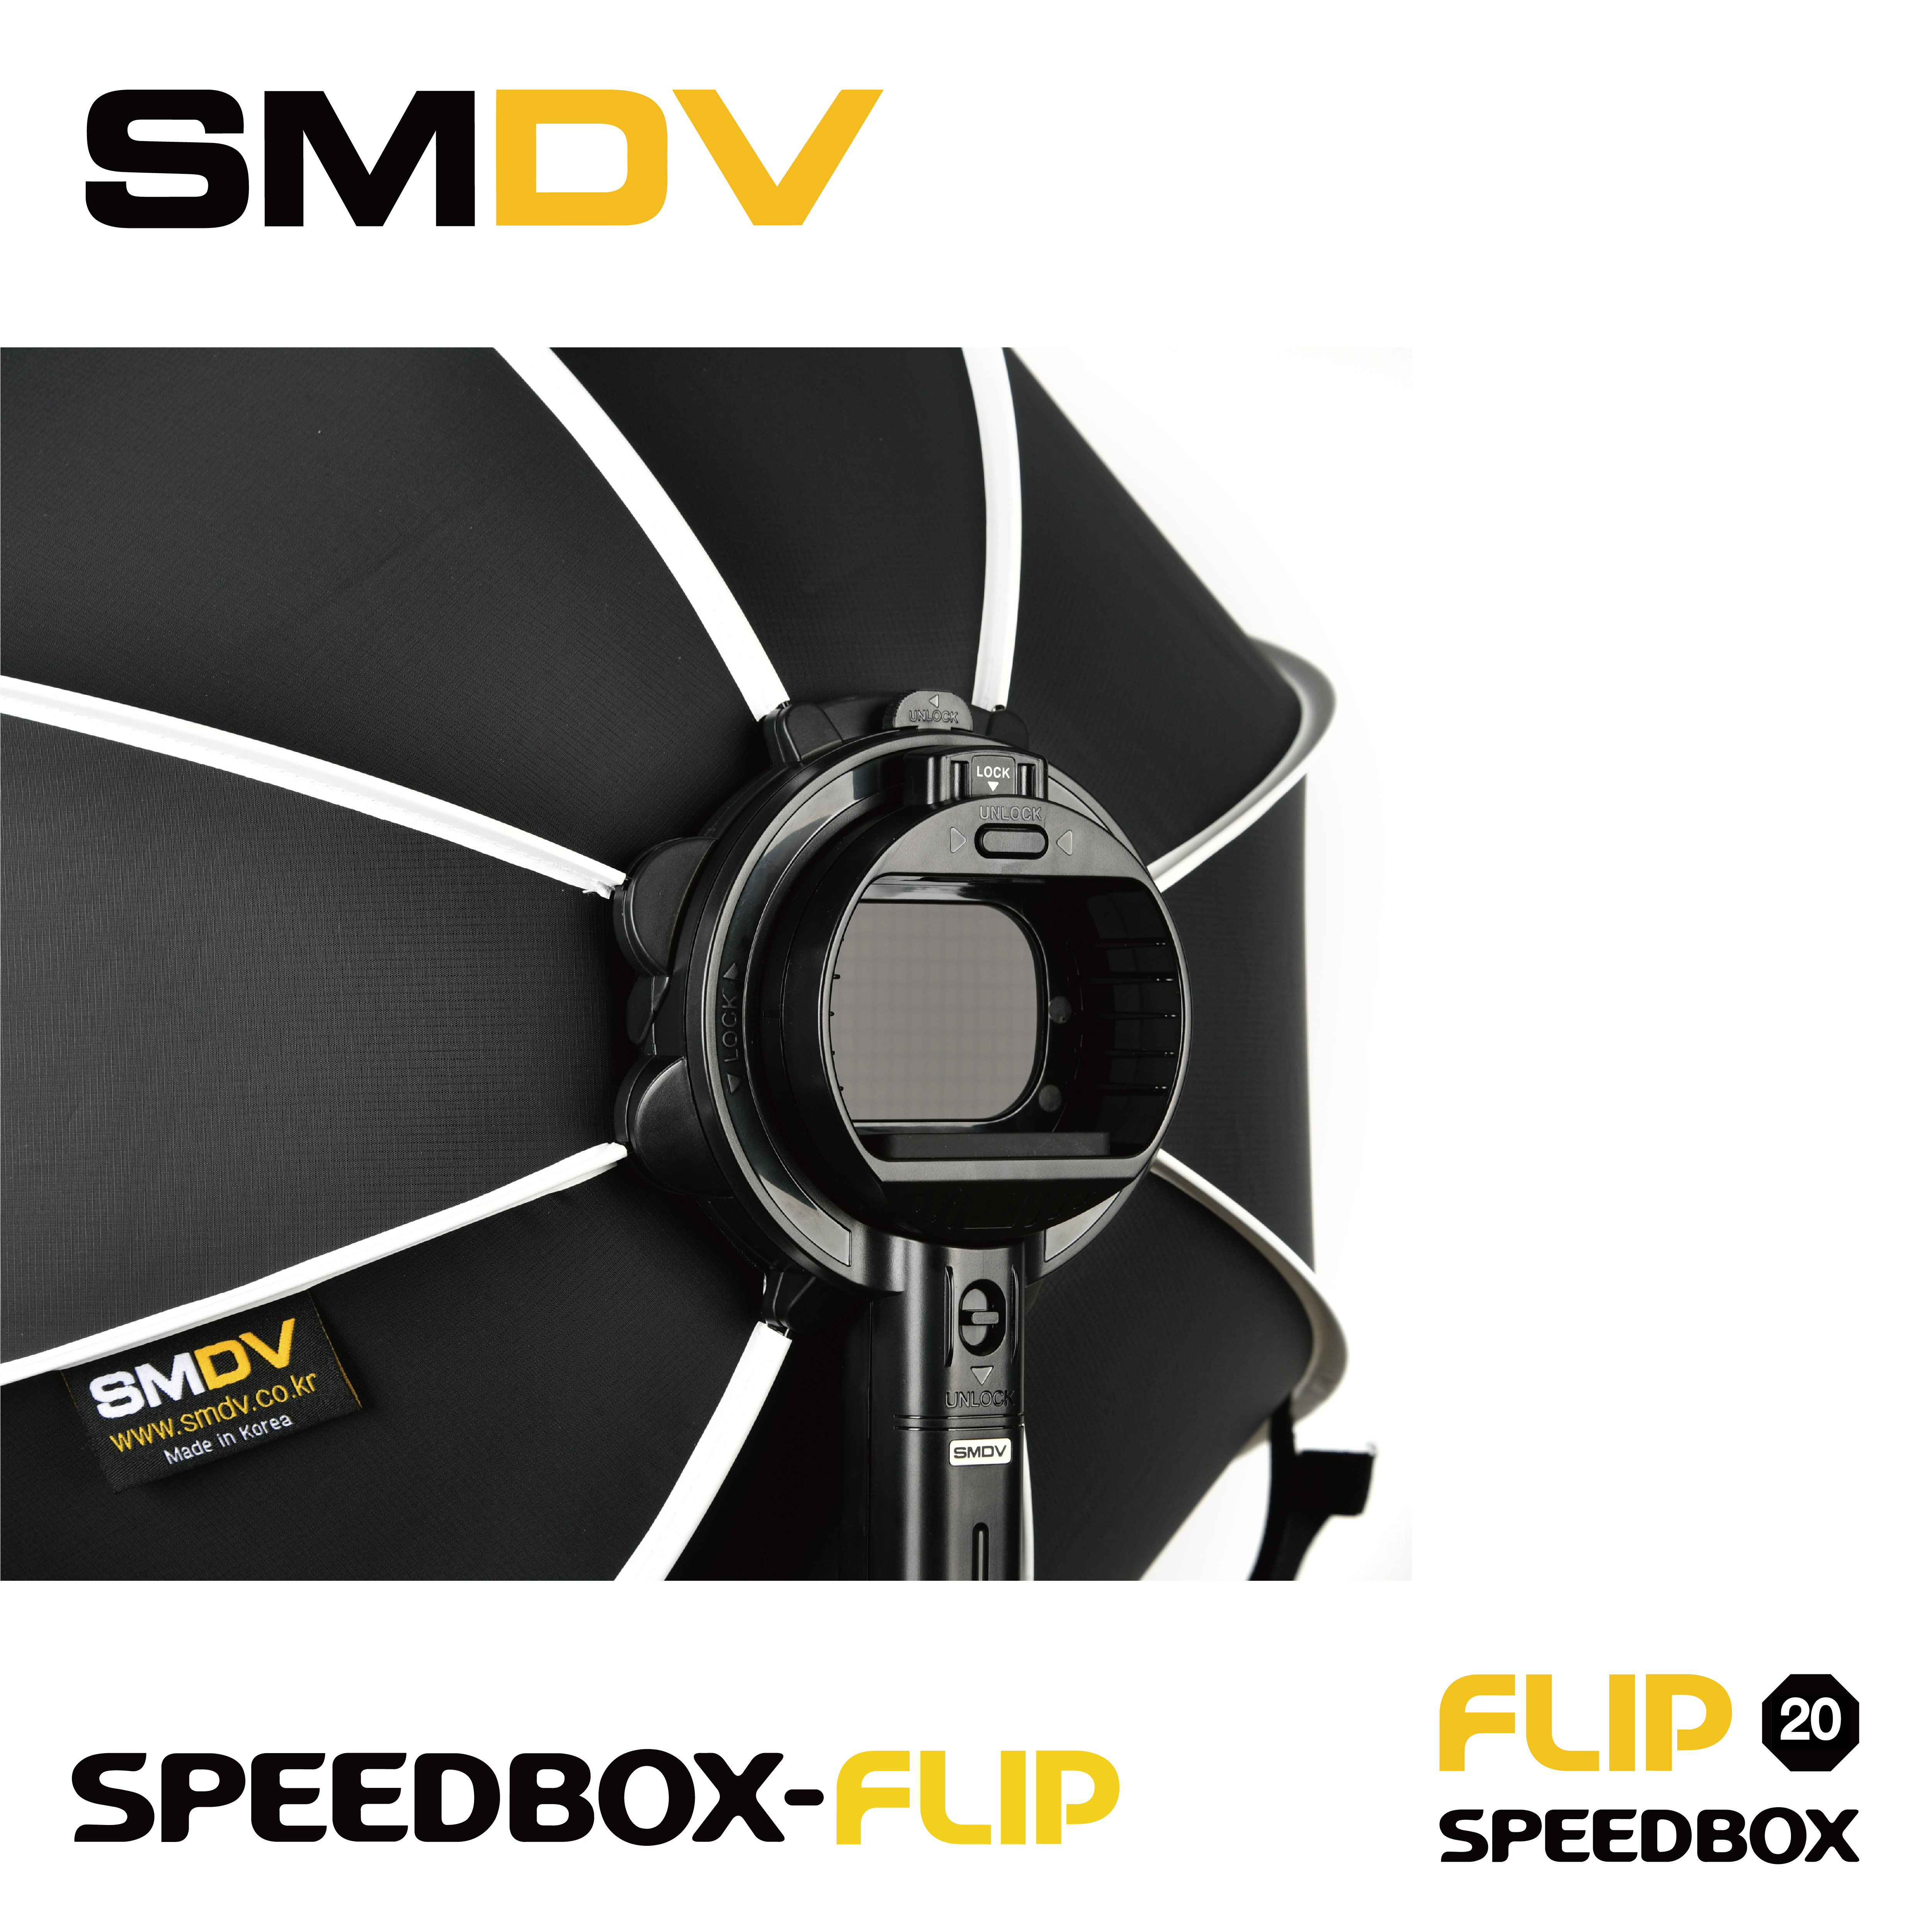 FLIP24G Speedbox from SMDV